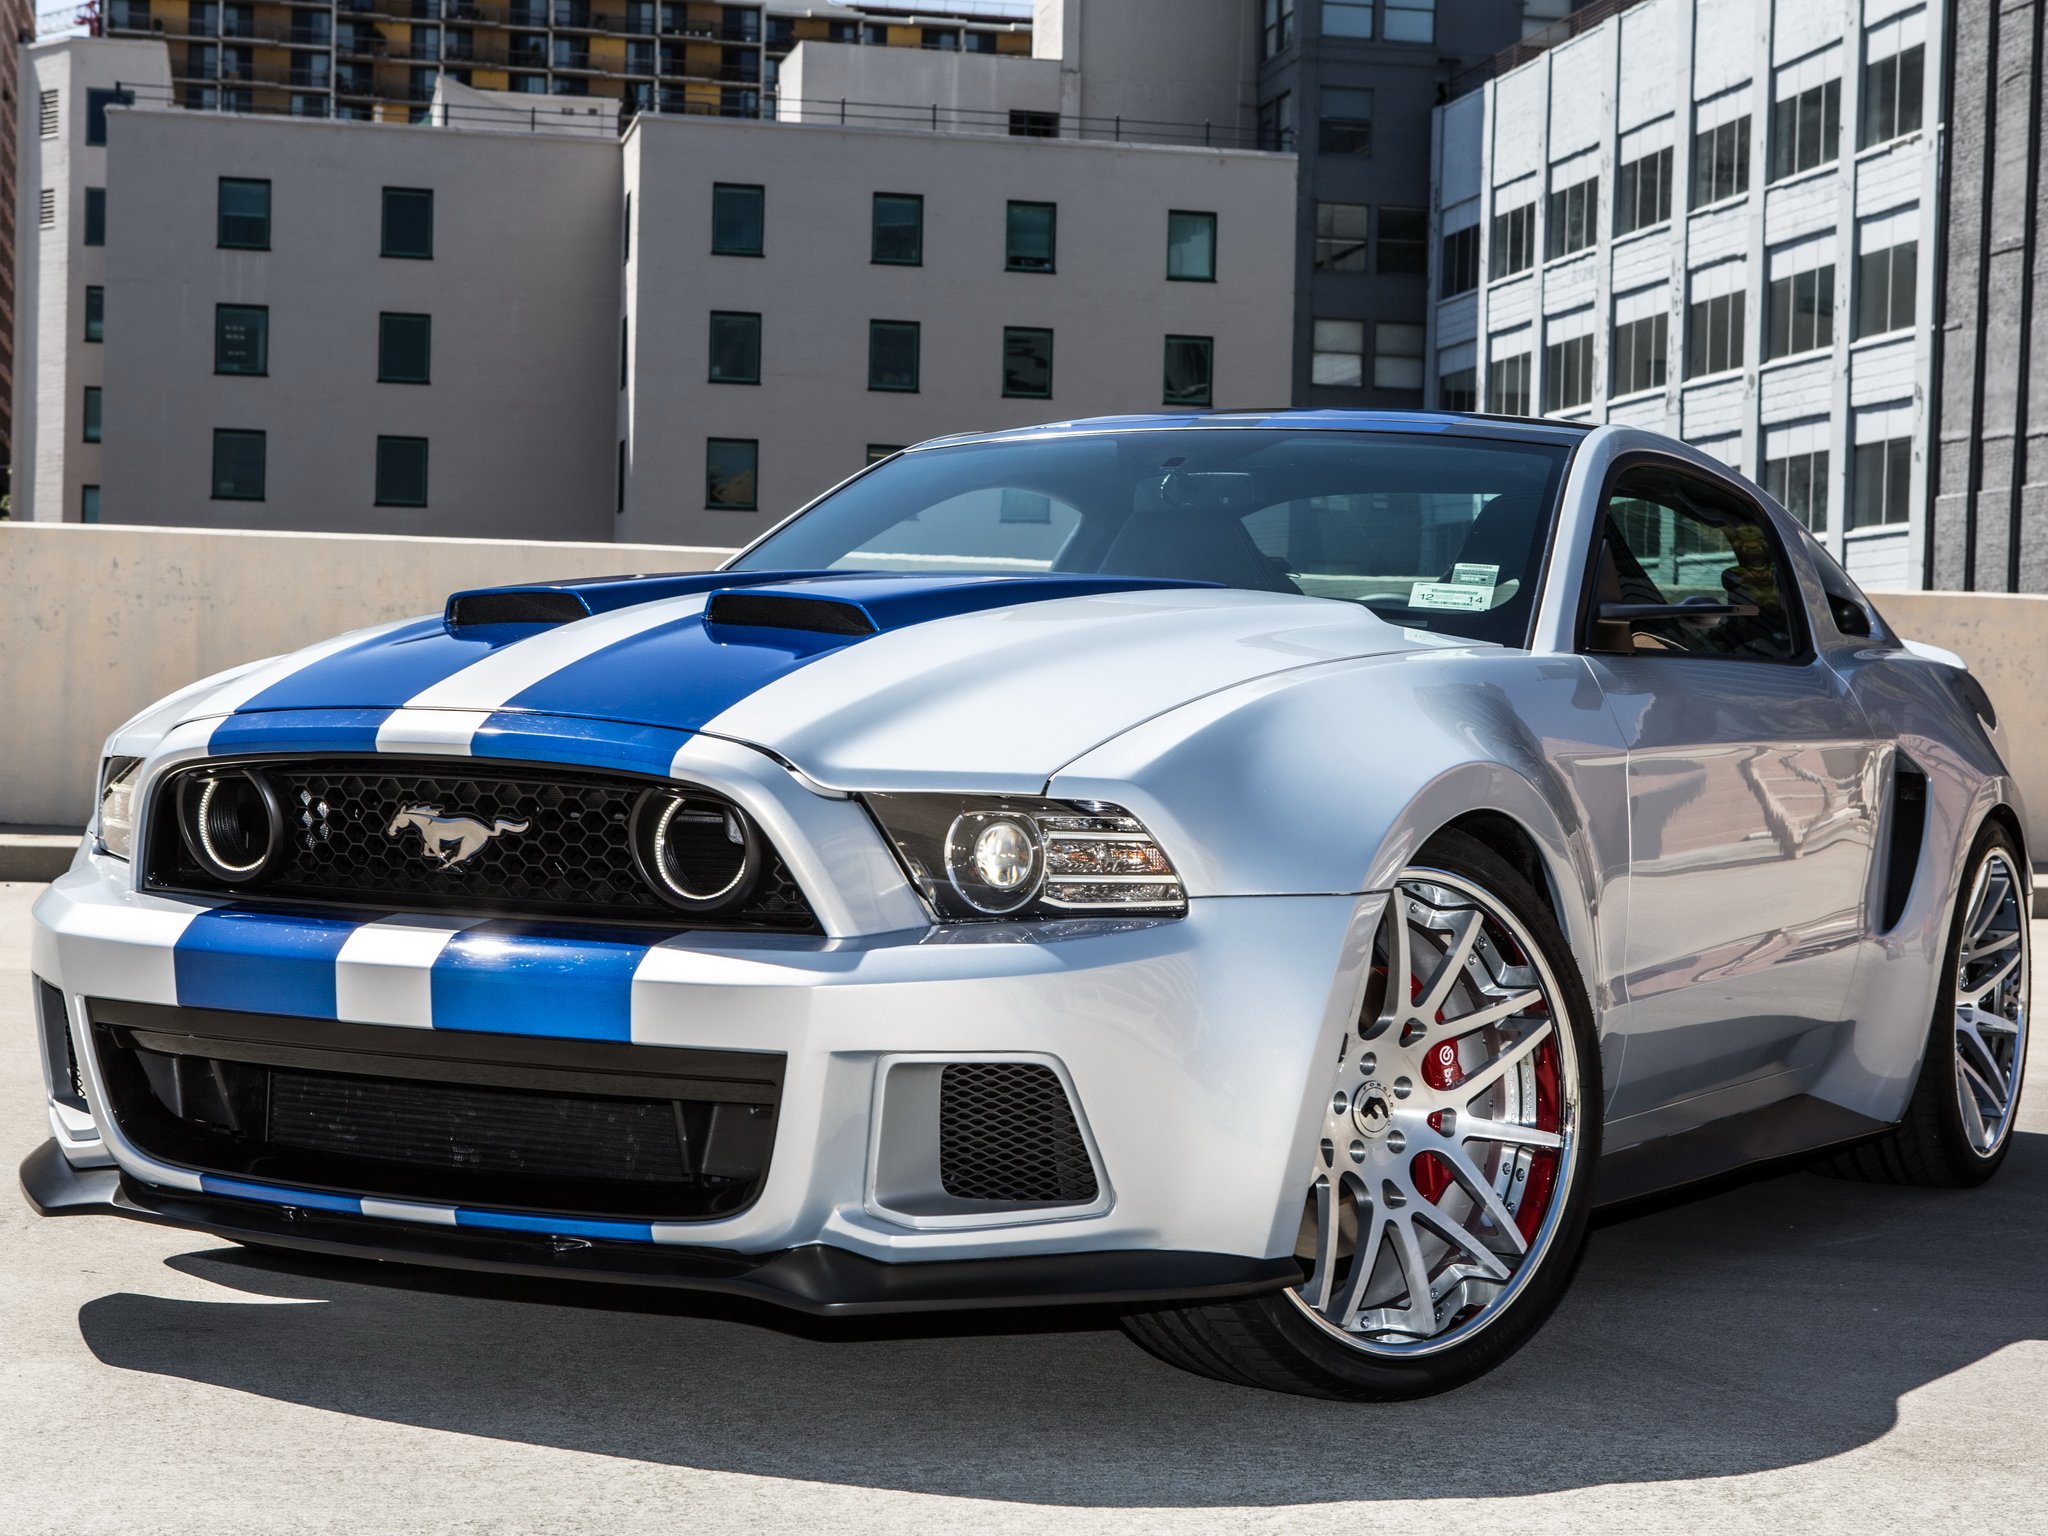 Mustang Need for Speed Wallpaper - WallpaperSafari